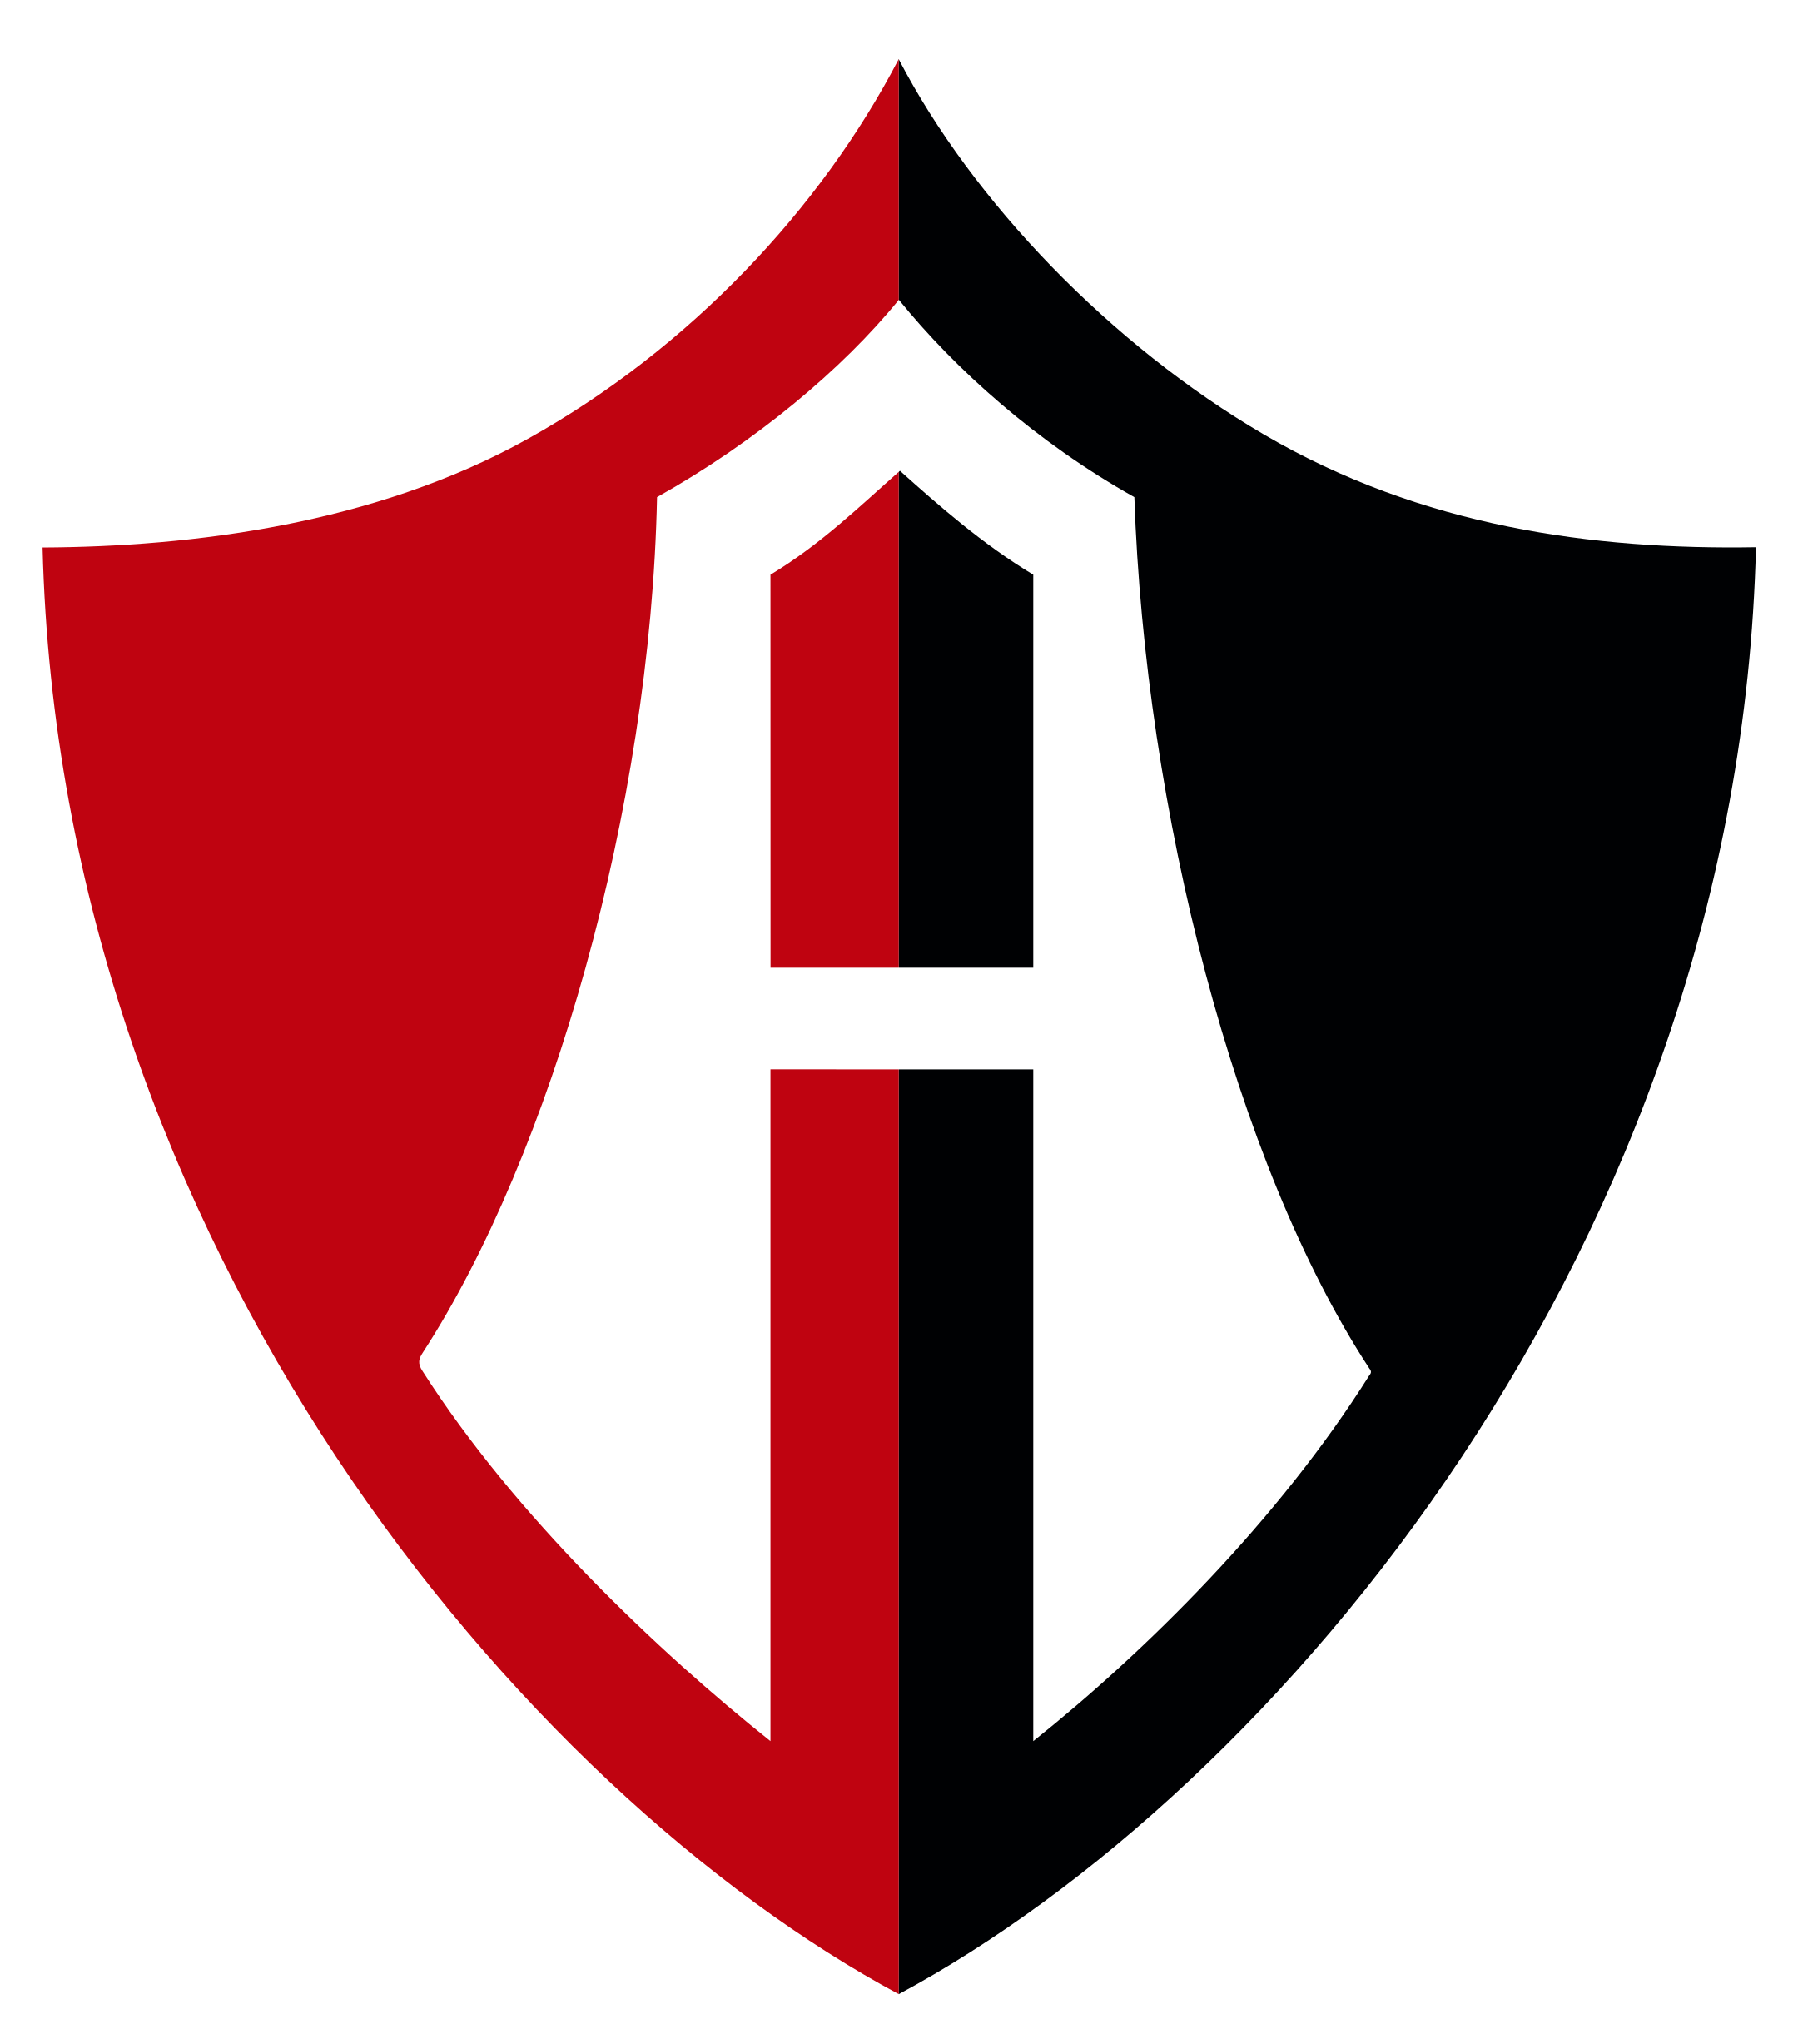 atlas fc logo 1 - Atlas FC Logo